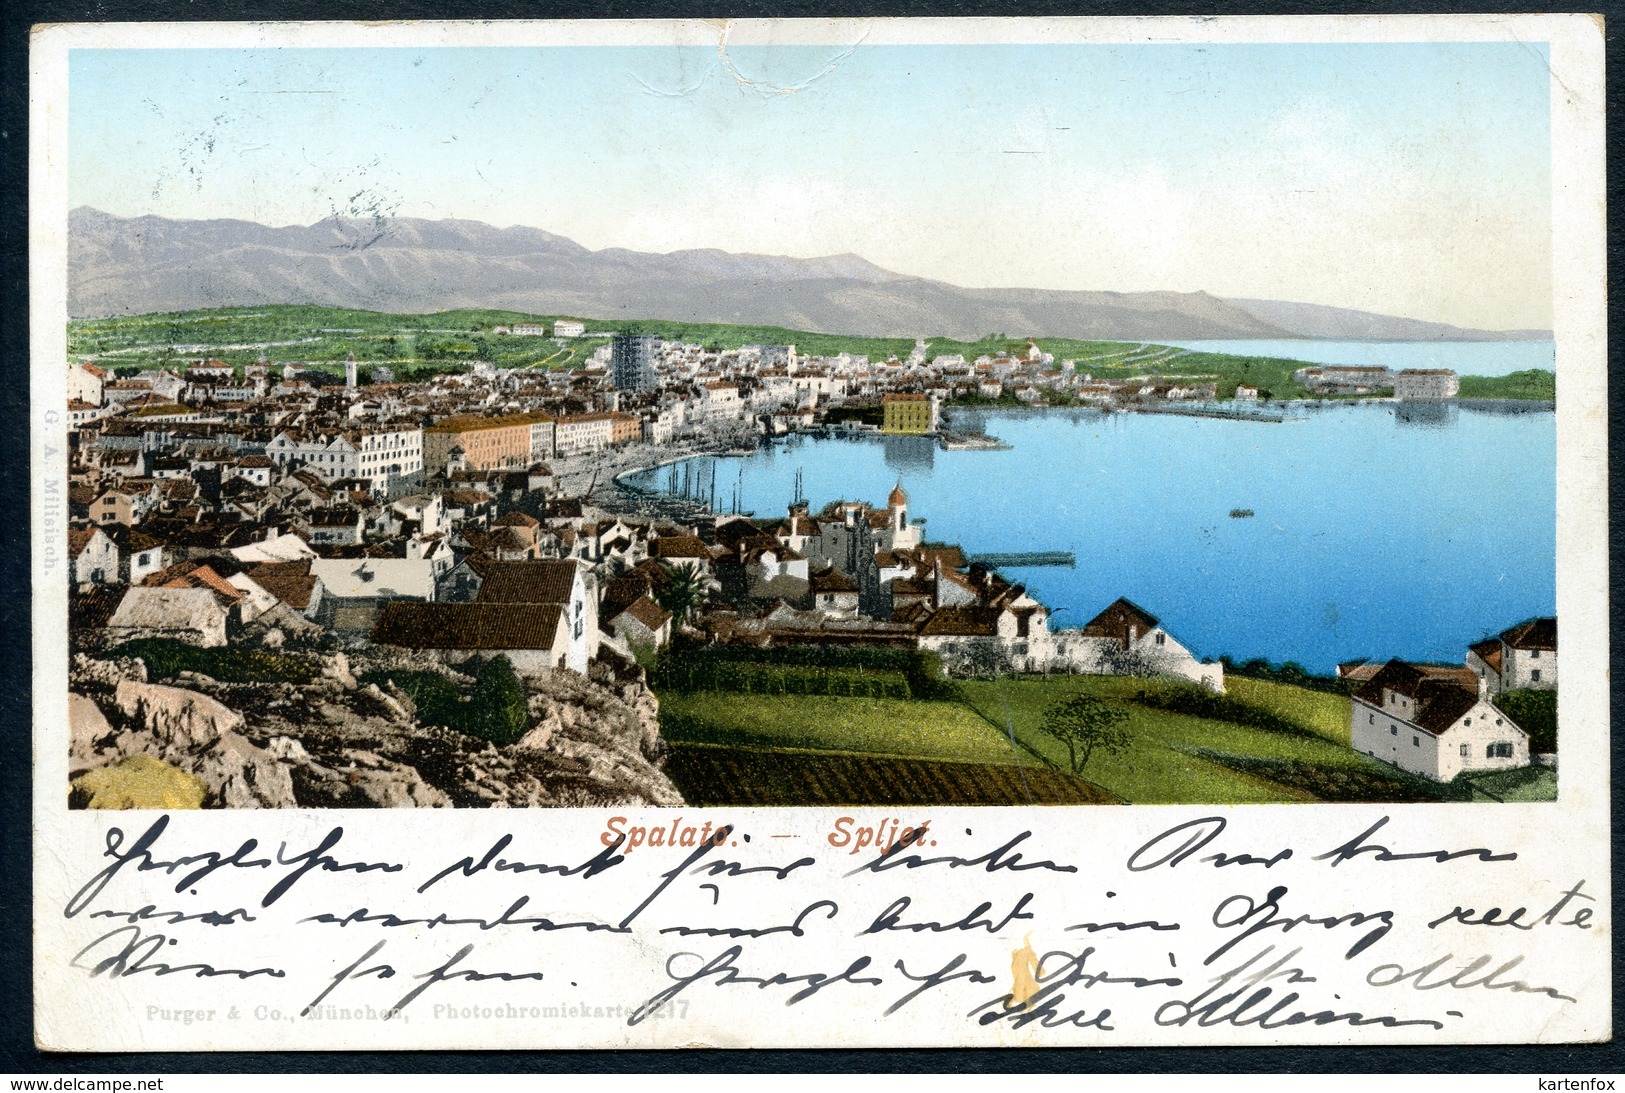 Spalato, Split, 1905, Panorama, LITHO, Purger & Co., - Kroatien